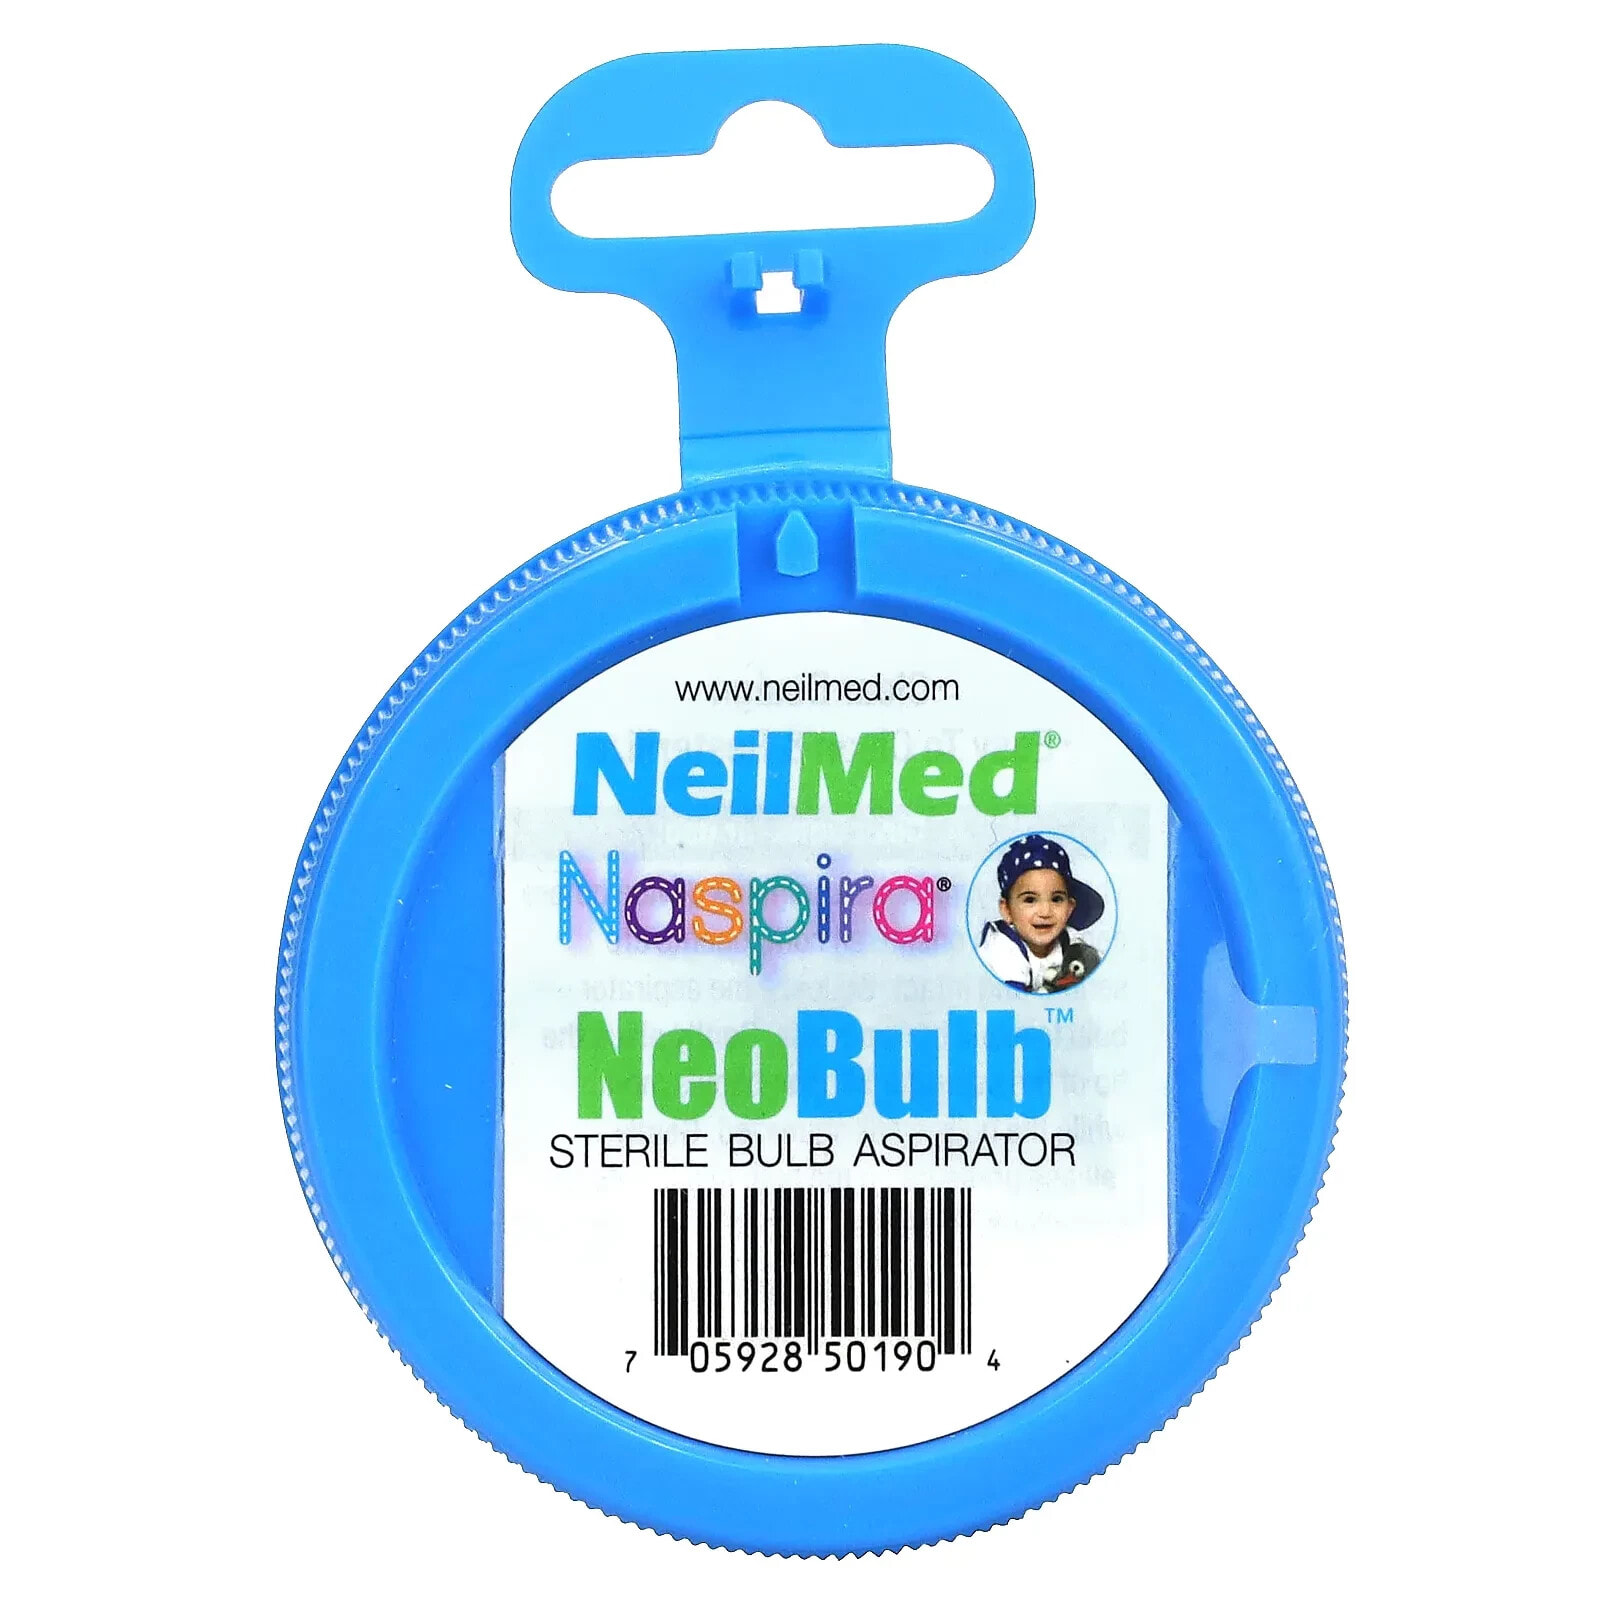 NeilMed, NeoBulb, Naspira, стерильный аспиратор для луковиц, 1 аспиратор